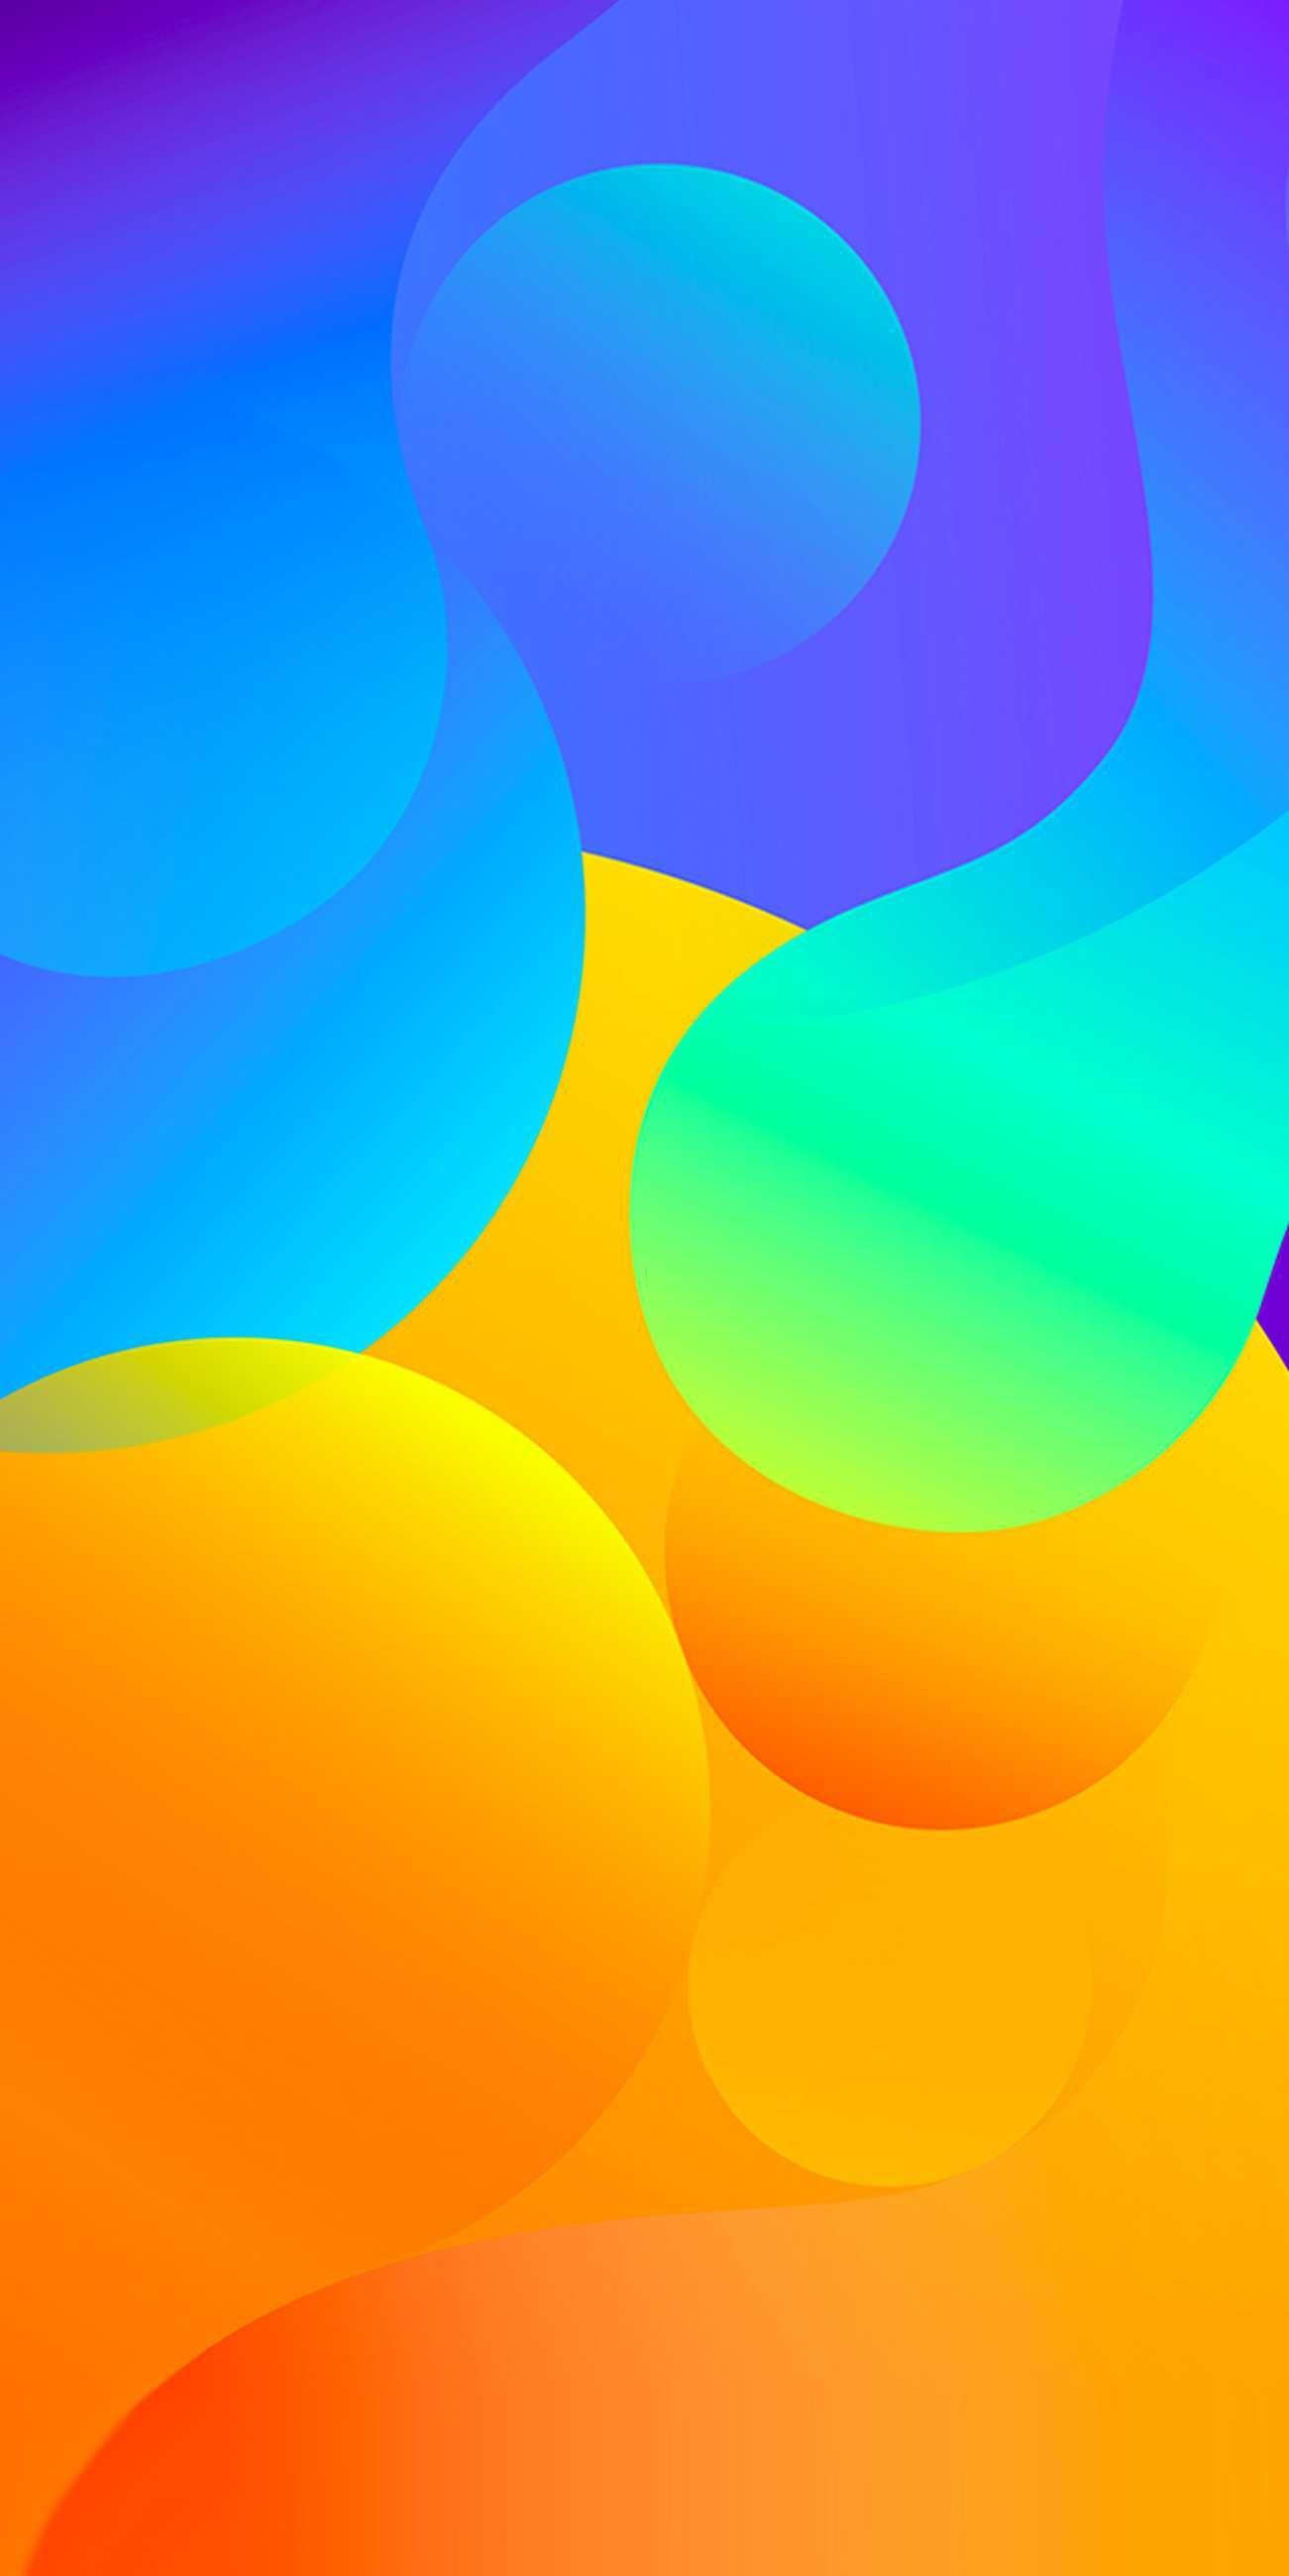 Colour Circles Abstract iPhone Wallpaper. Color wallpaper iphone, Abstract iphone wallpaper, iPhone wallpaper